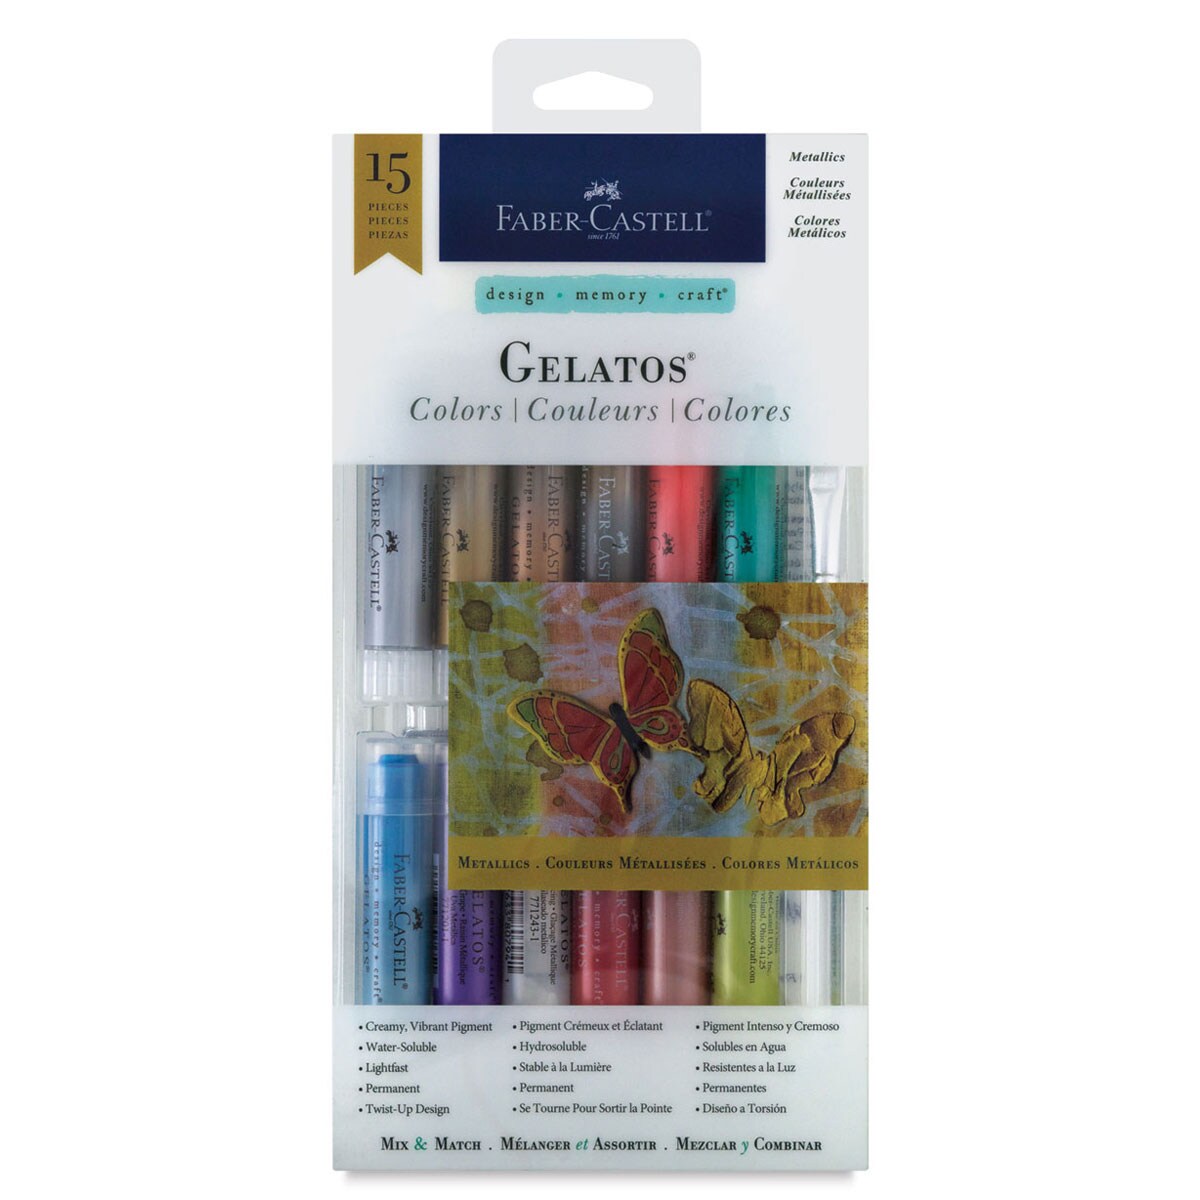 Faber-Castell Gelatos Sets - Assorted Metallic Colors, Set of 15